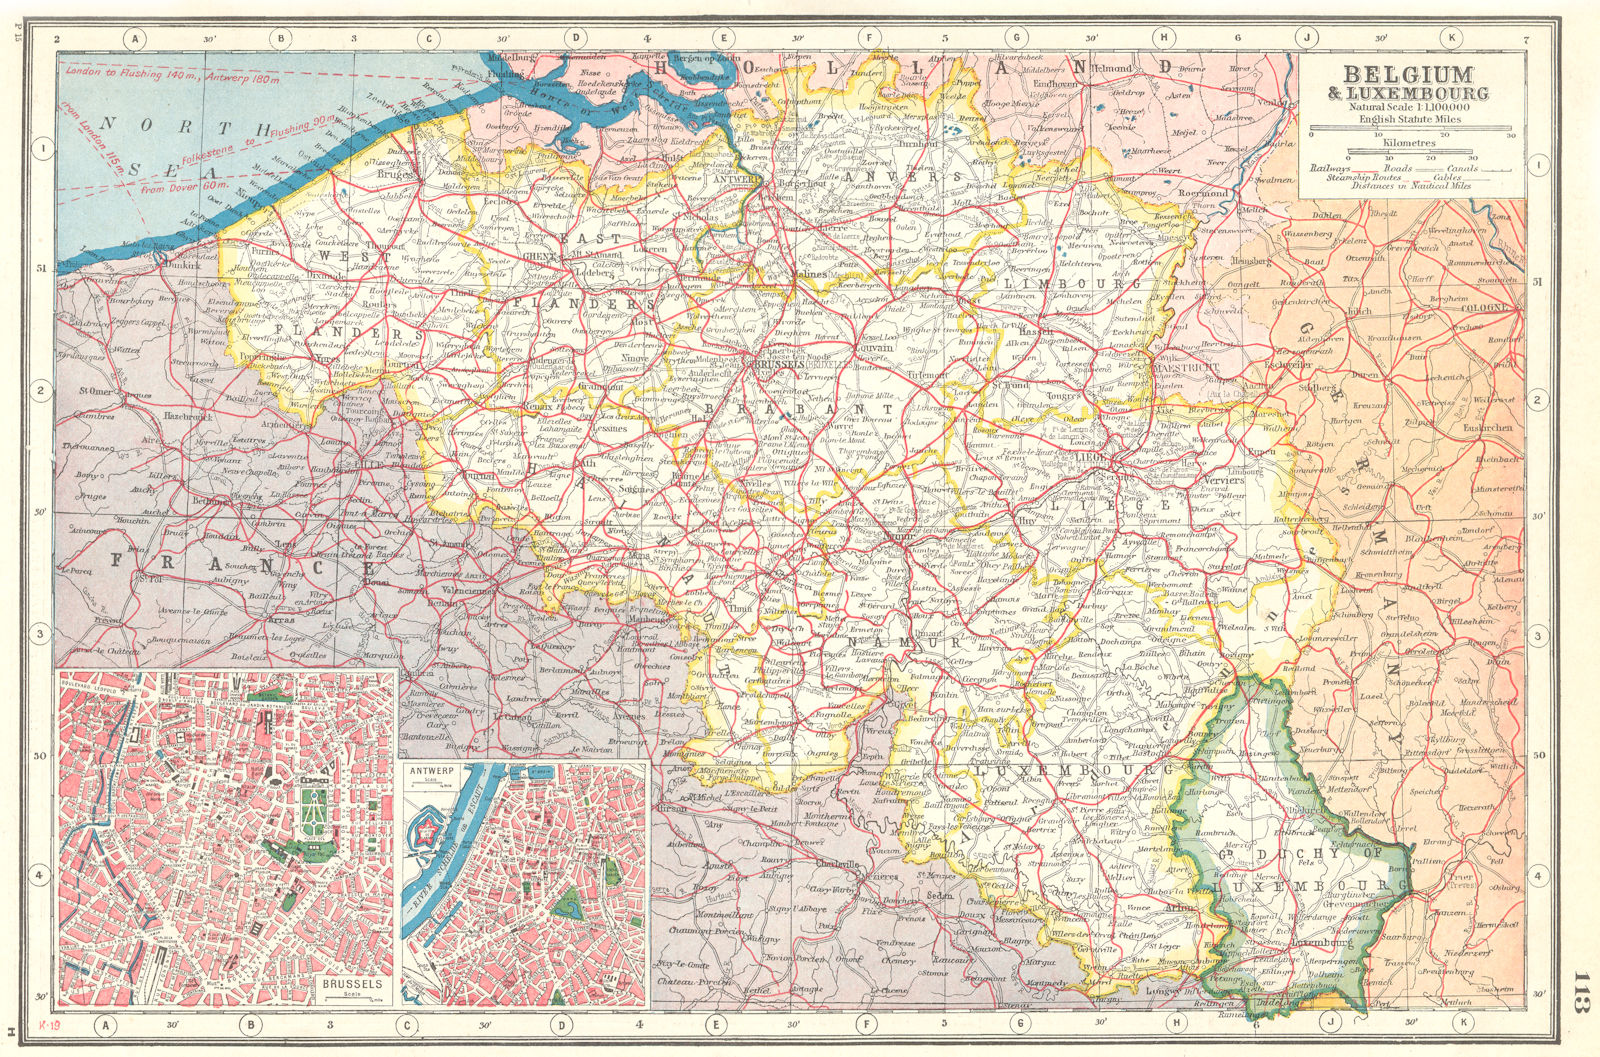 BELGIUM & LUXEMBOURG. Railways canals. Inset Brussels & Antwerp plans 1920 map